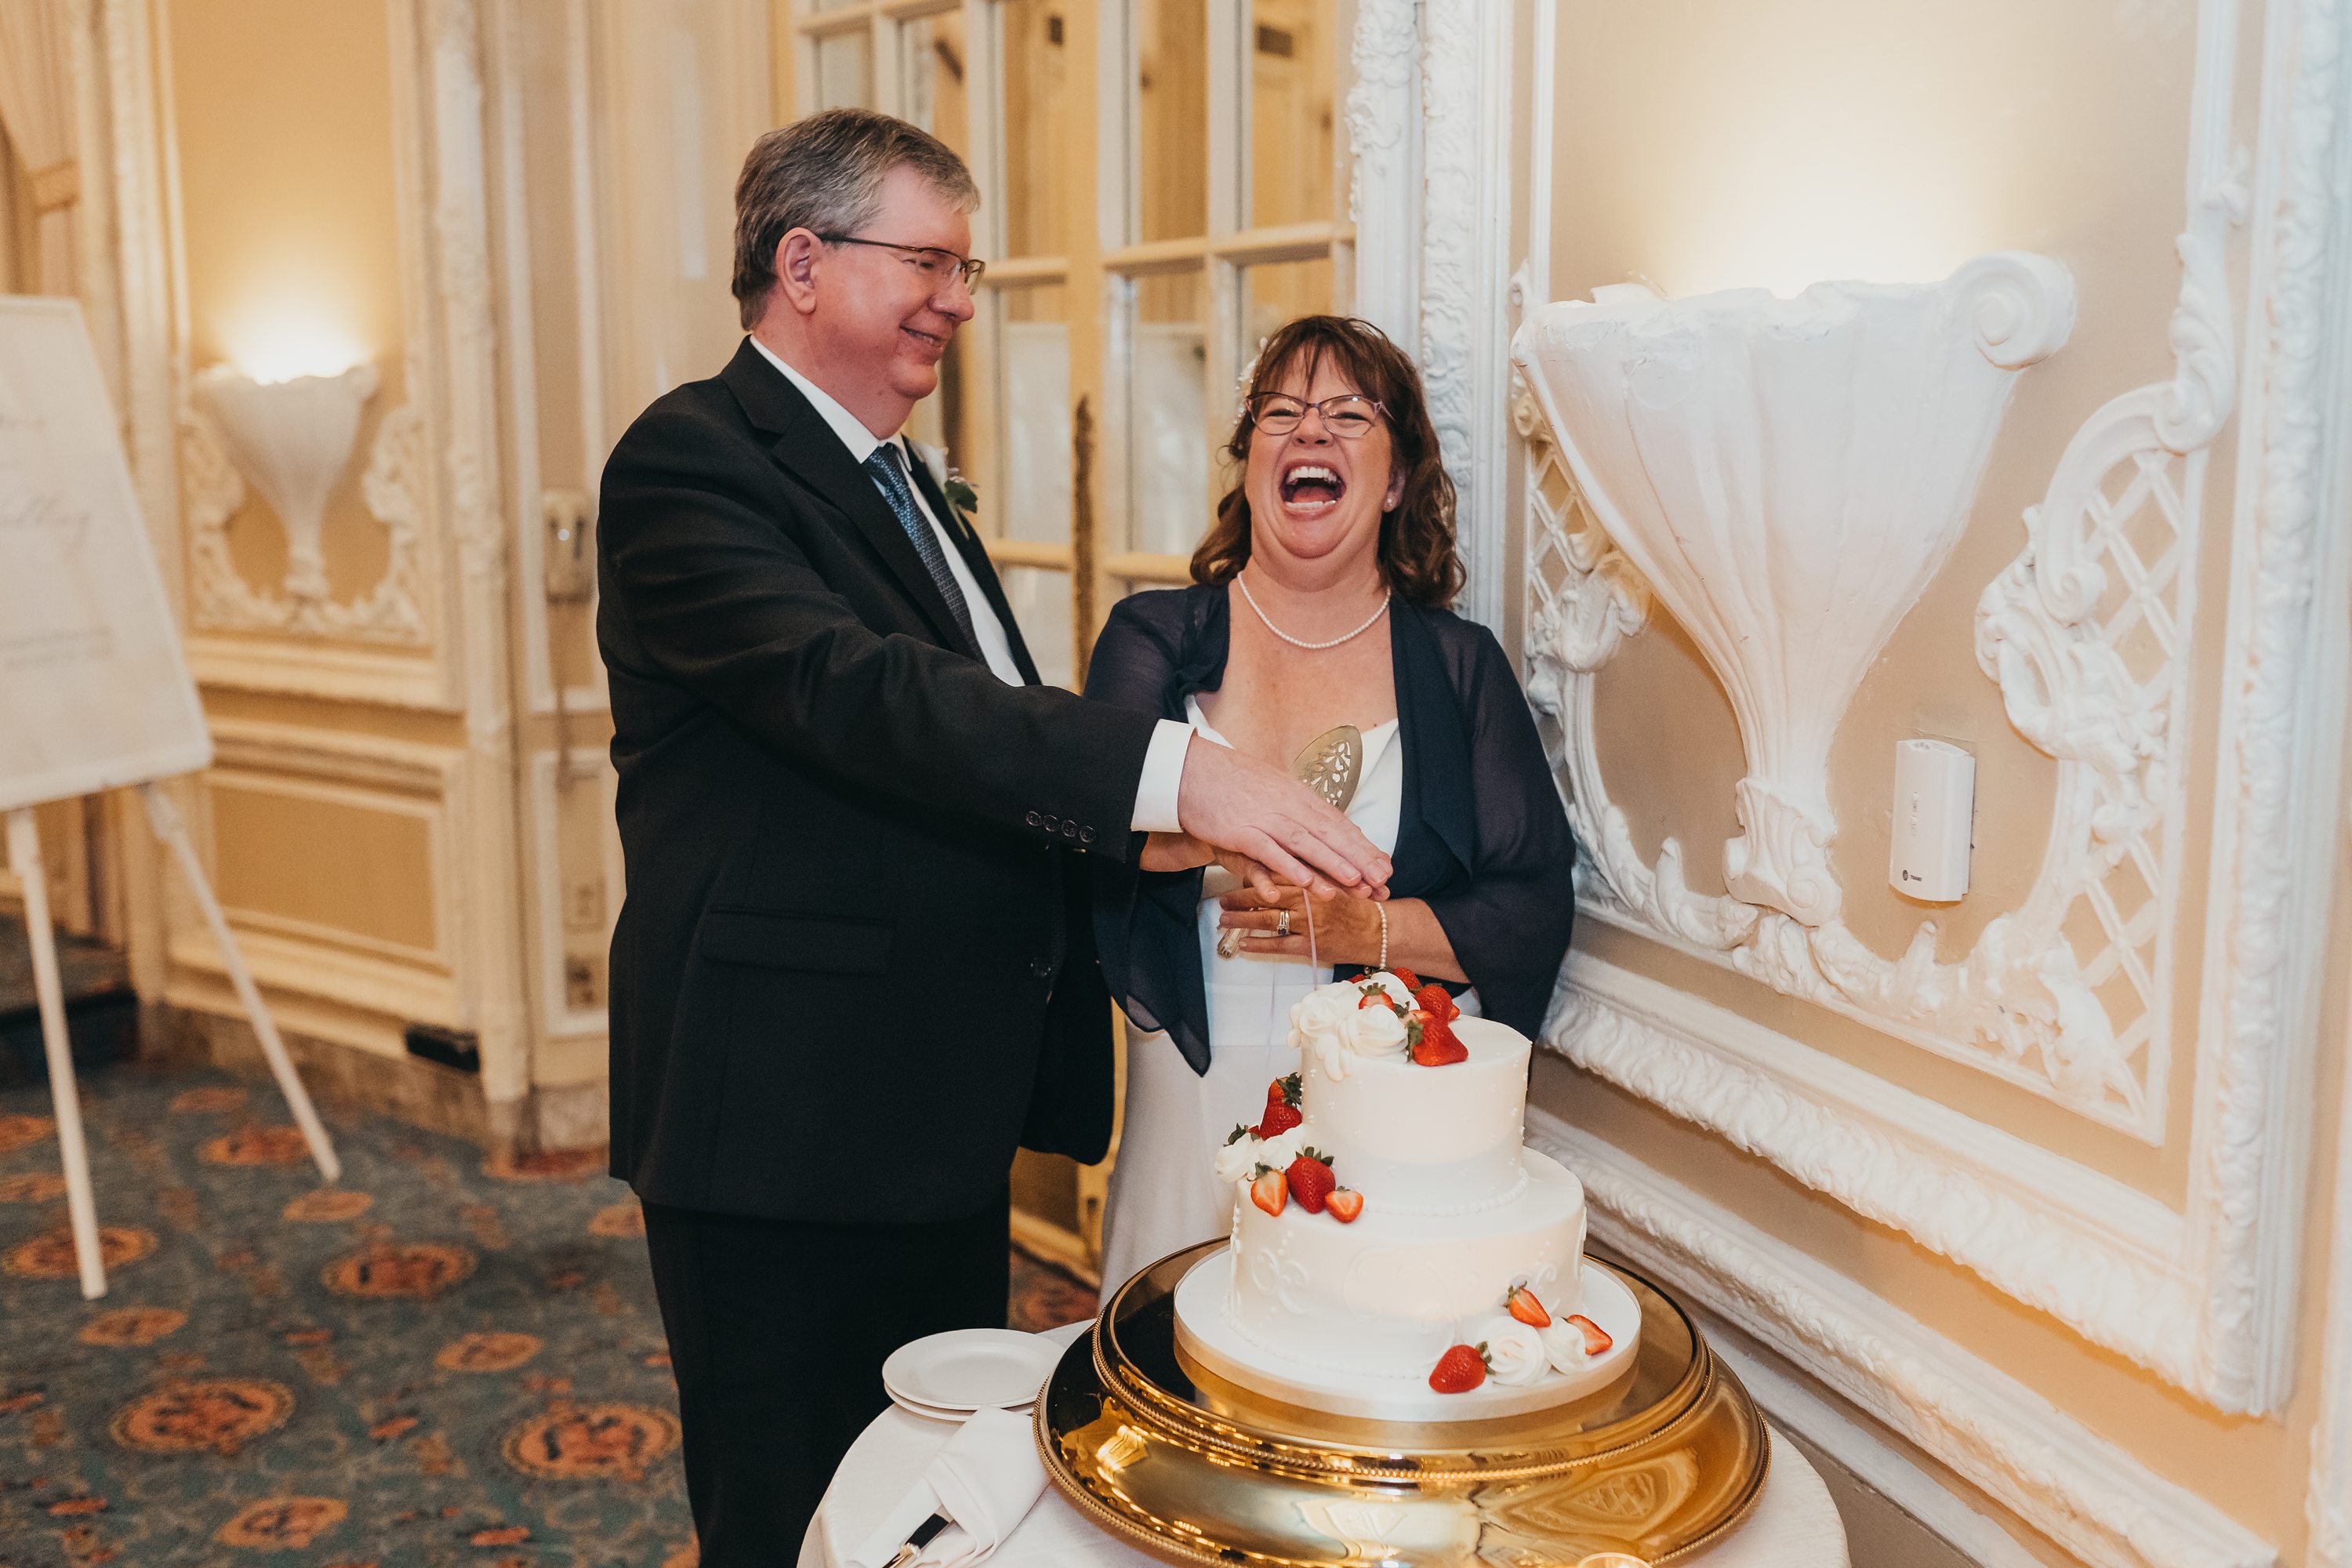 sony alpha a7iii,Boston wedding,dessert works bakery boston,couple lauging before cutting wedding cake